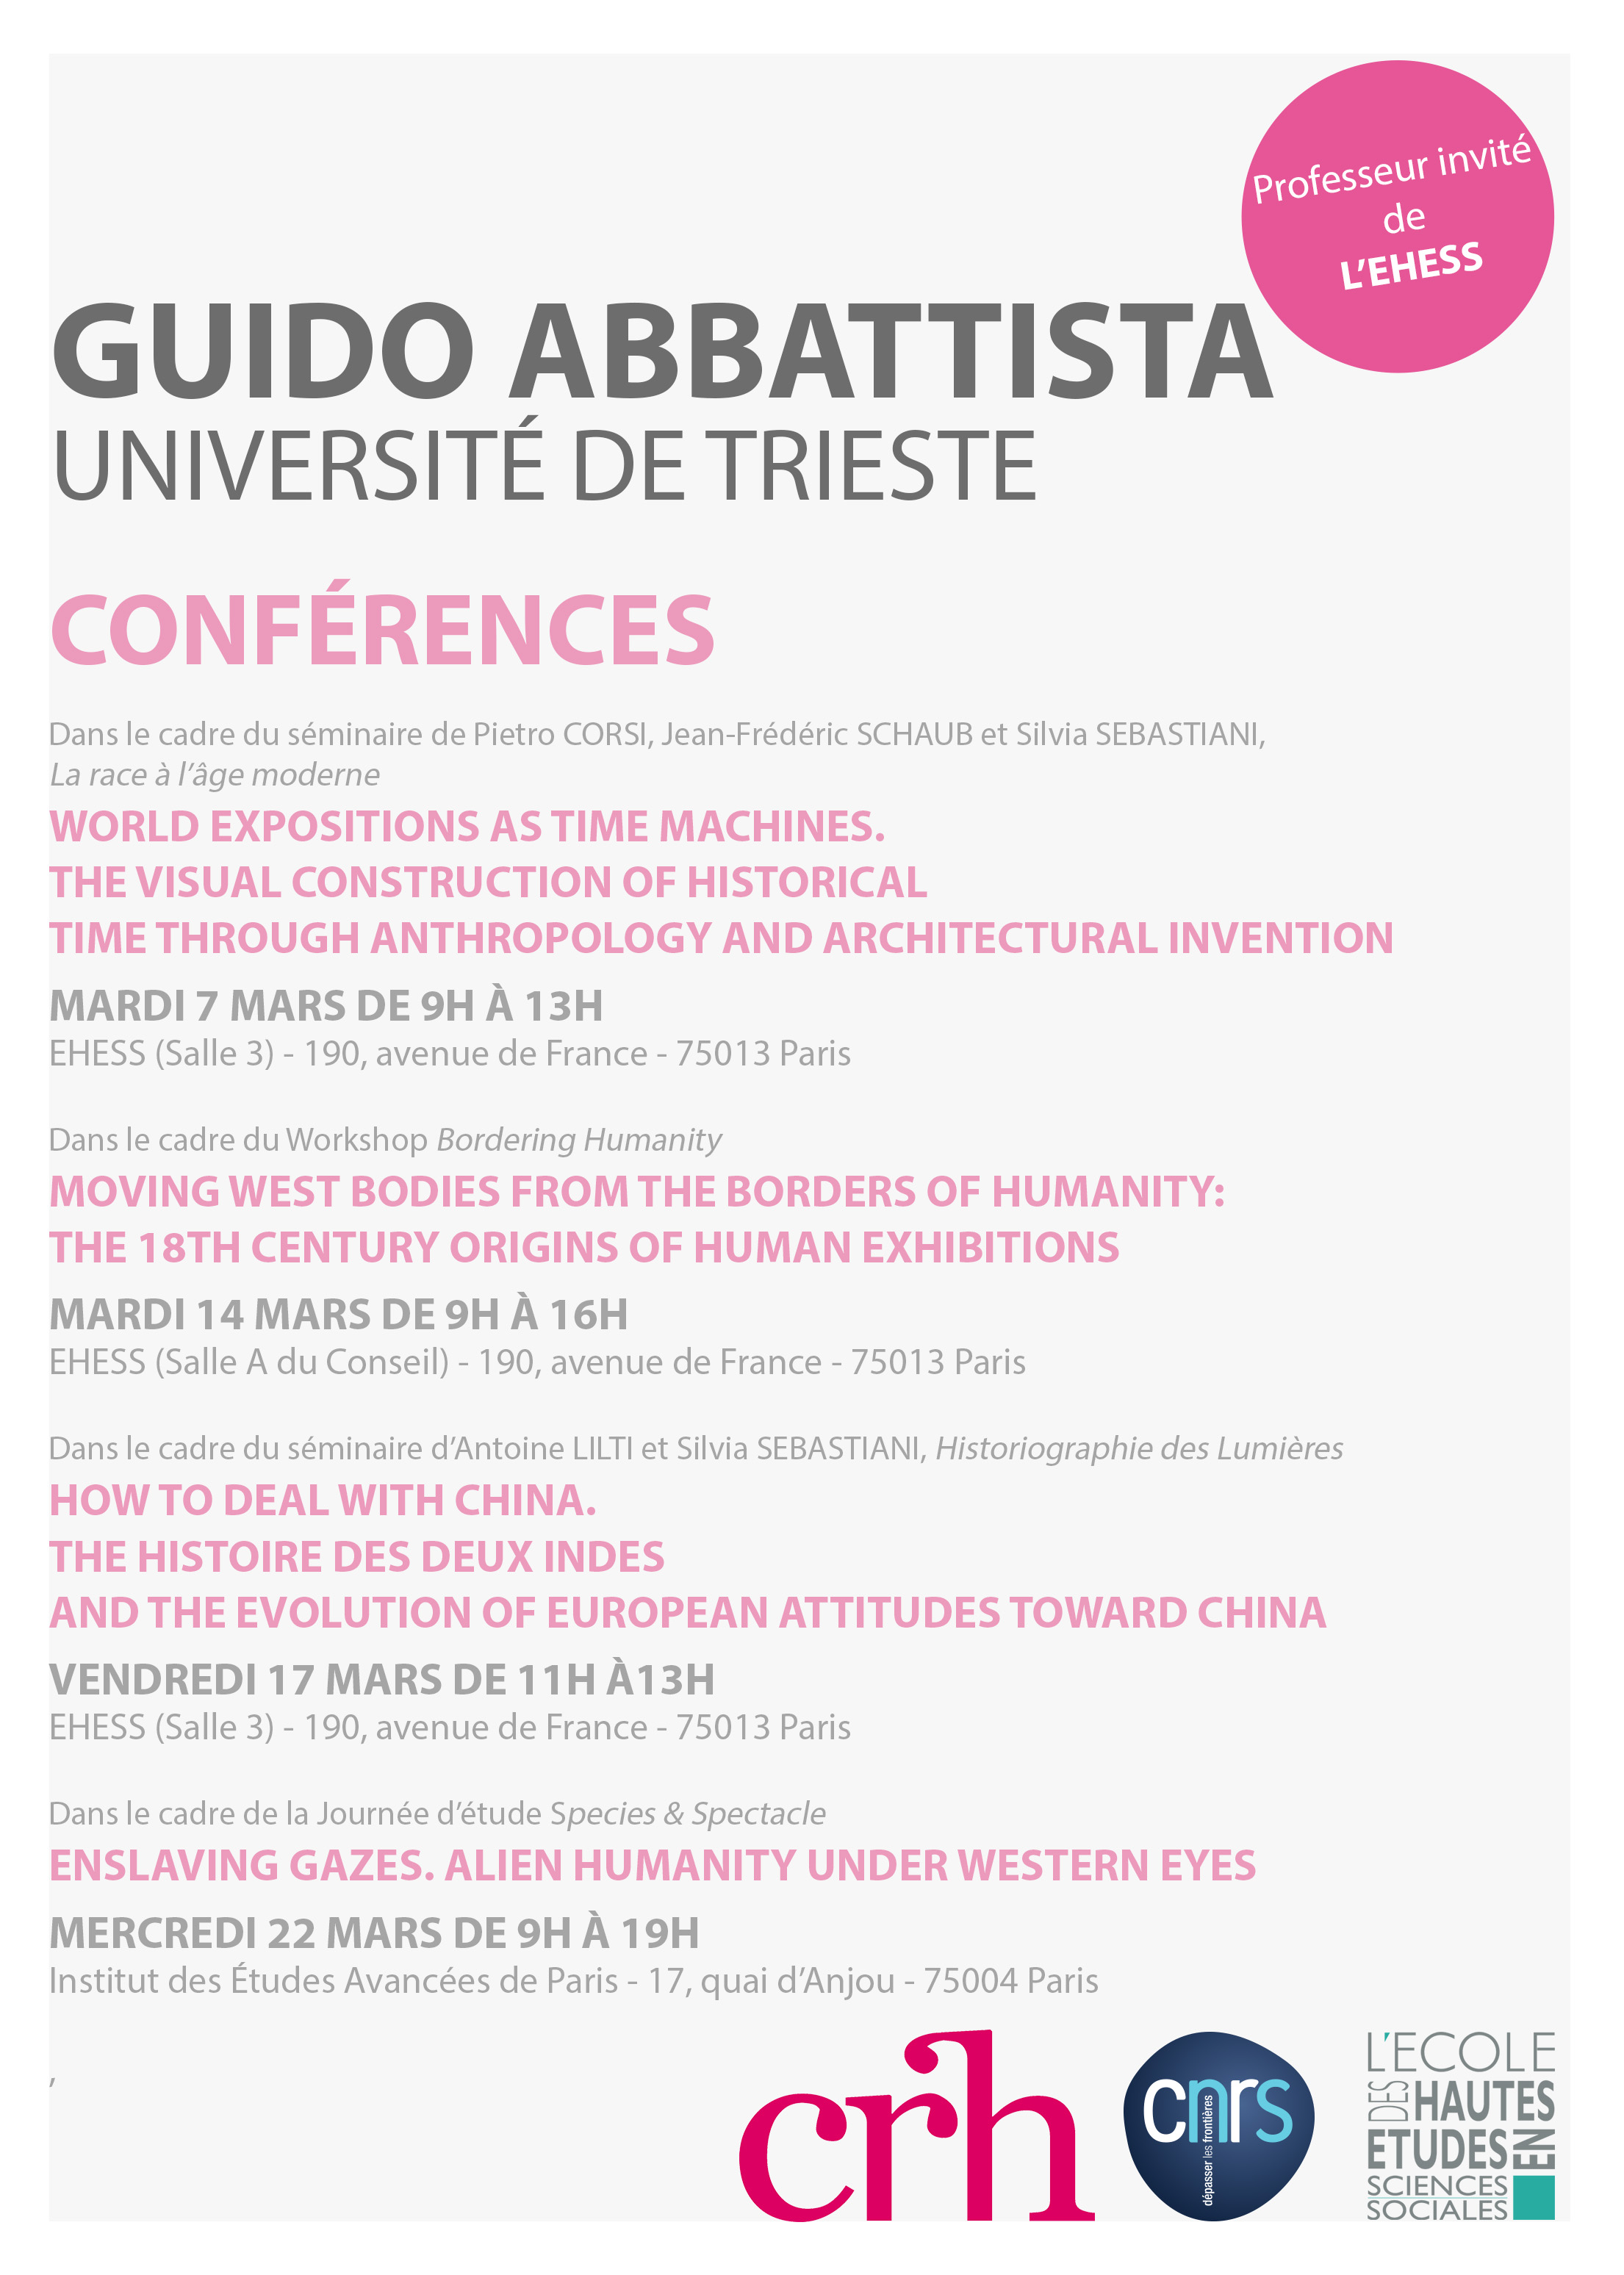 Conférences de Guido Abbattista